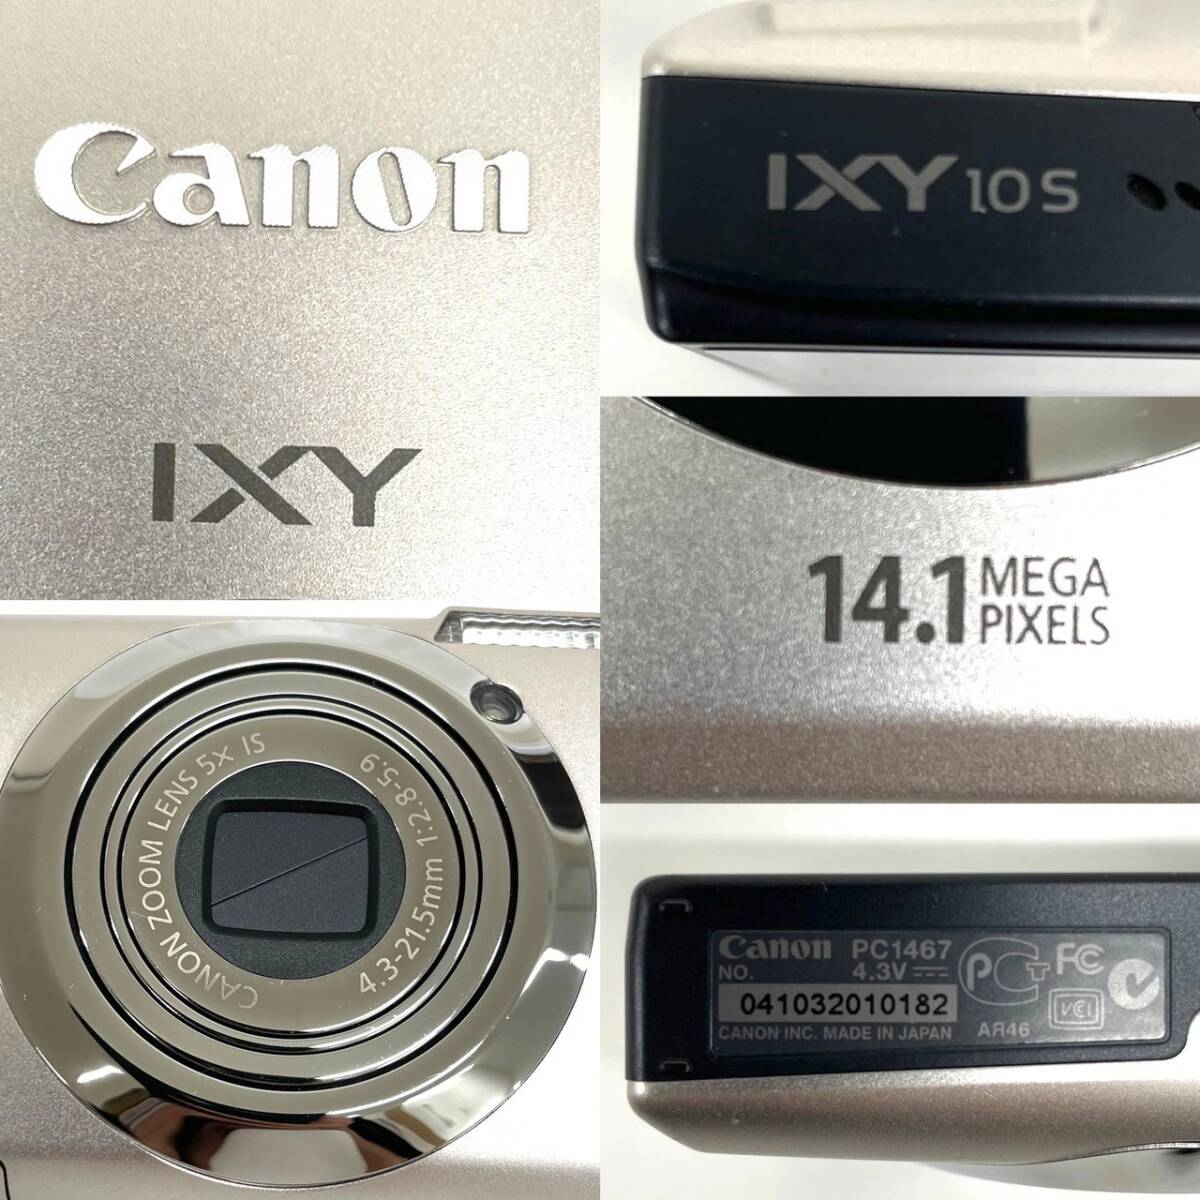 D6840*10　美品　Canon　キャノン　デジカメ　IXY 10S　PC1467　14.1MEGA PIXELS/ZOOM LENS 5x IS　4.3-21.5mm 1:2.8-5.9　ケース付き_画像7